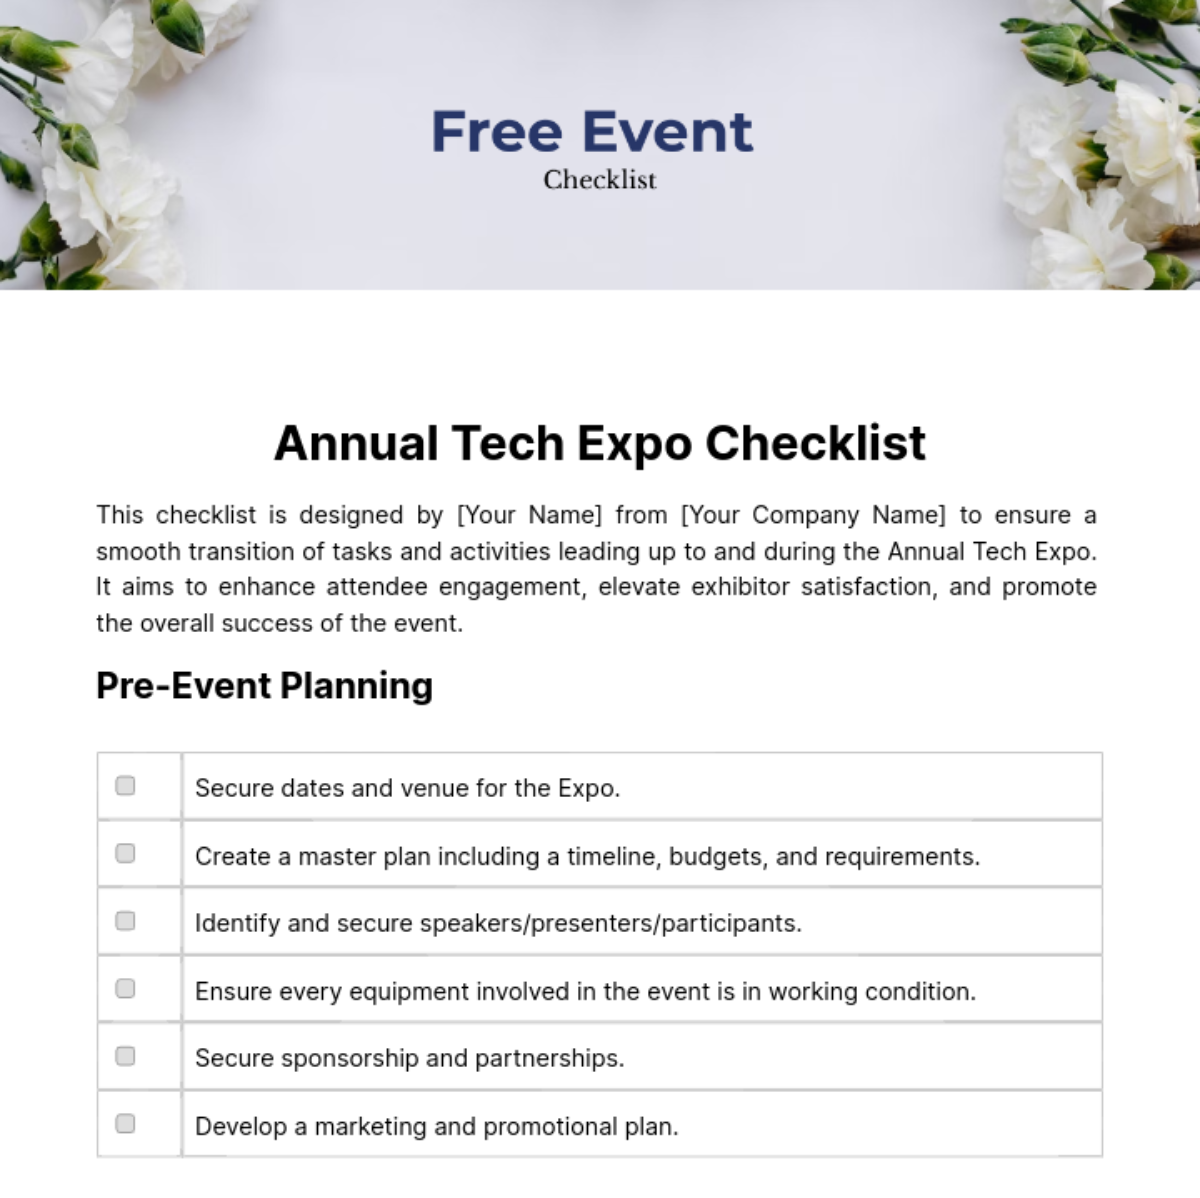 Free Event Checklist Template